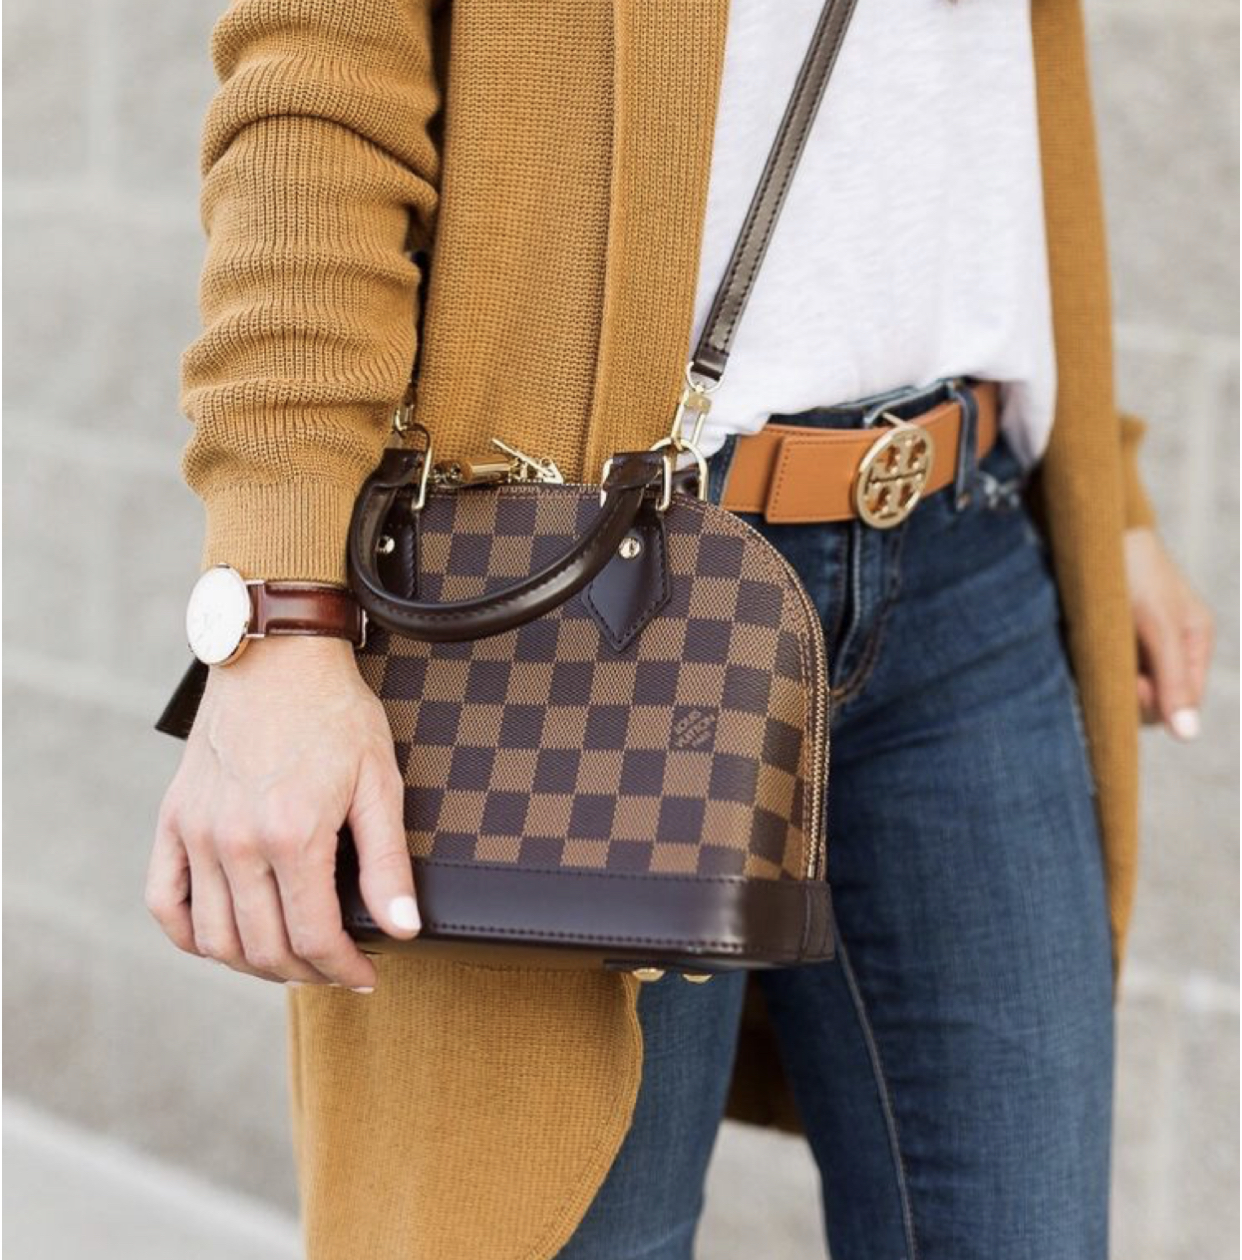 Louis Vuitton Alma Bag Price List - Brands Blogger